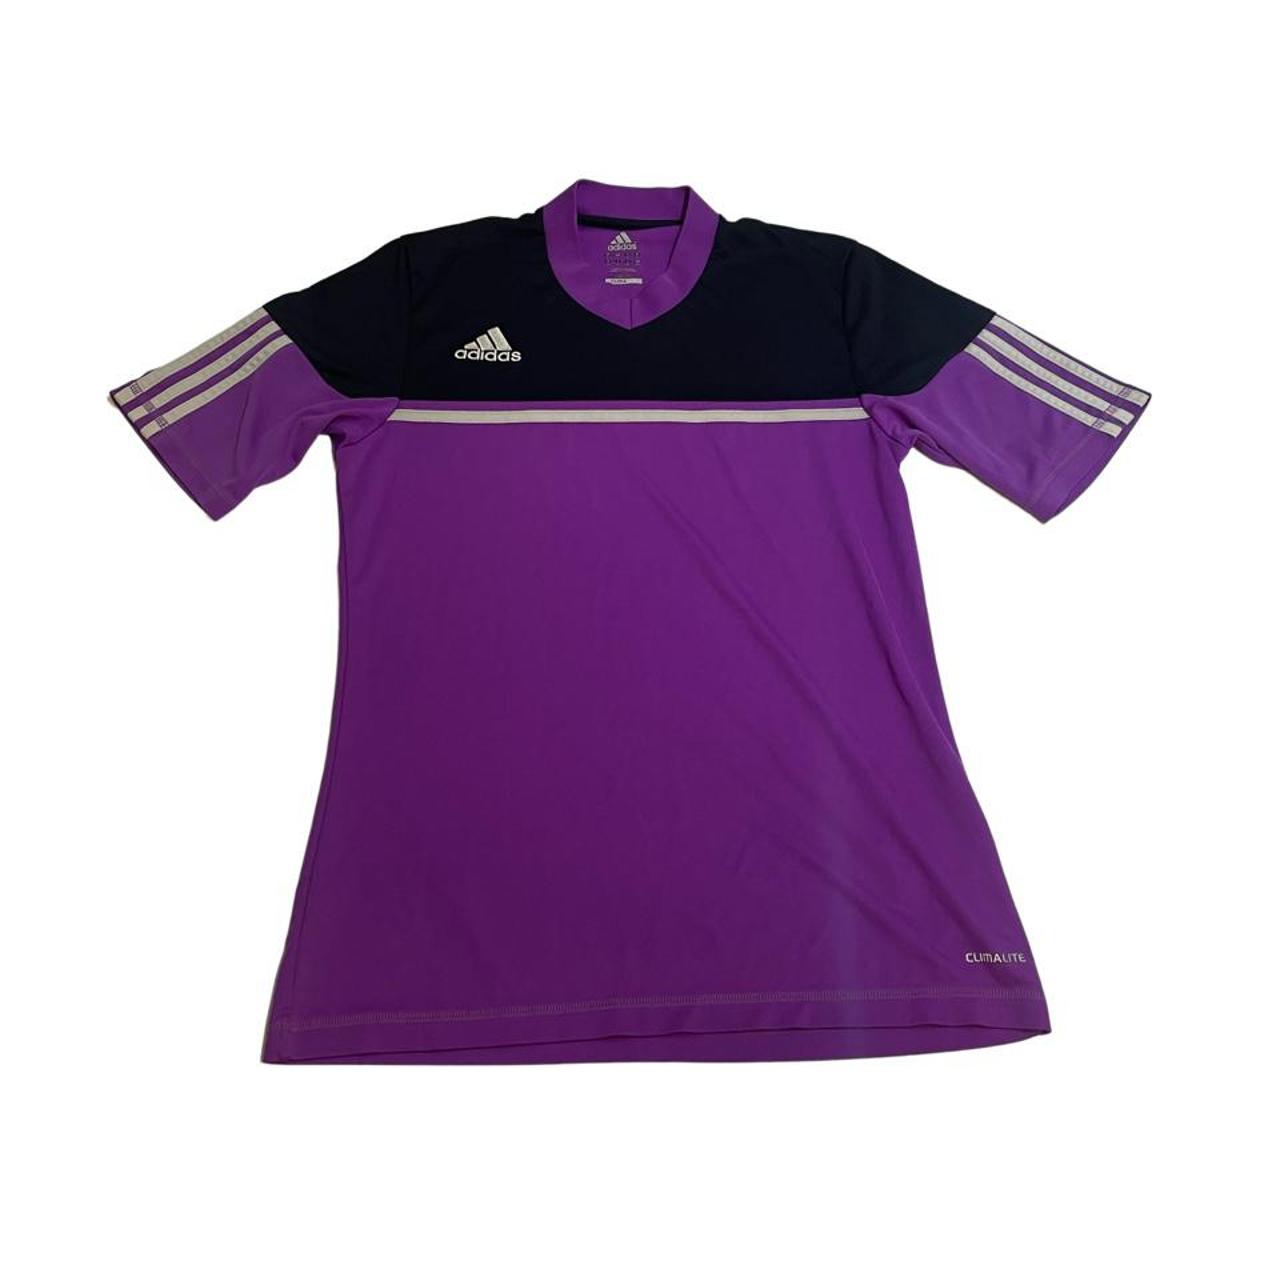 Adidas Men's Purple and Black T-shirt | Depop